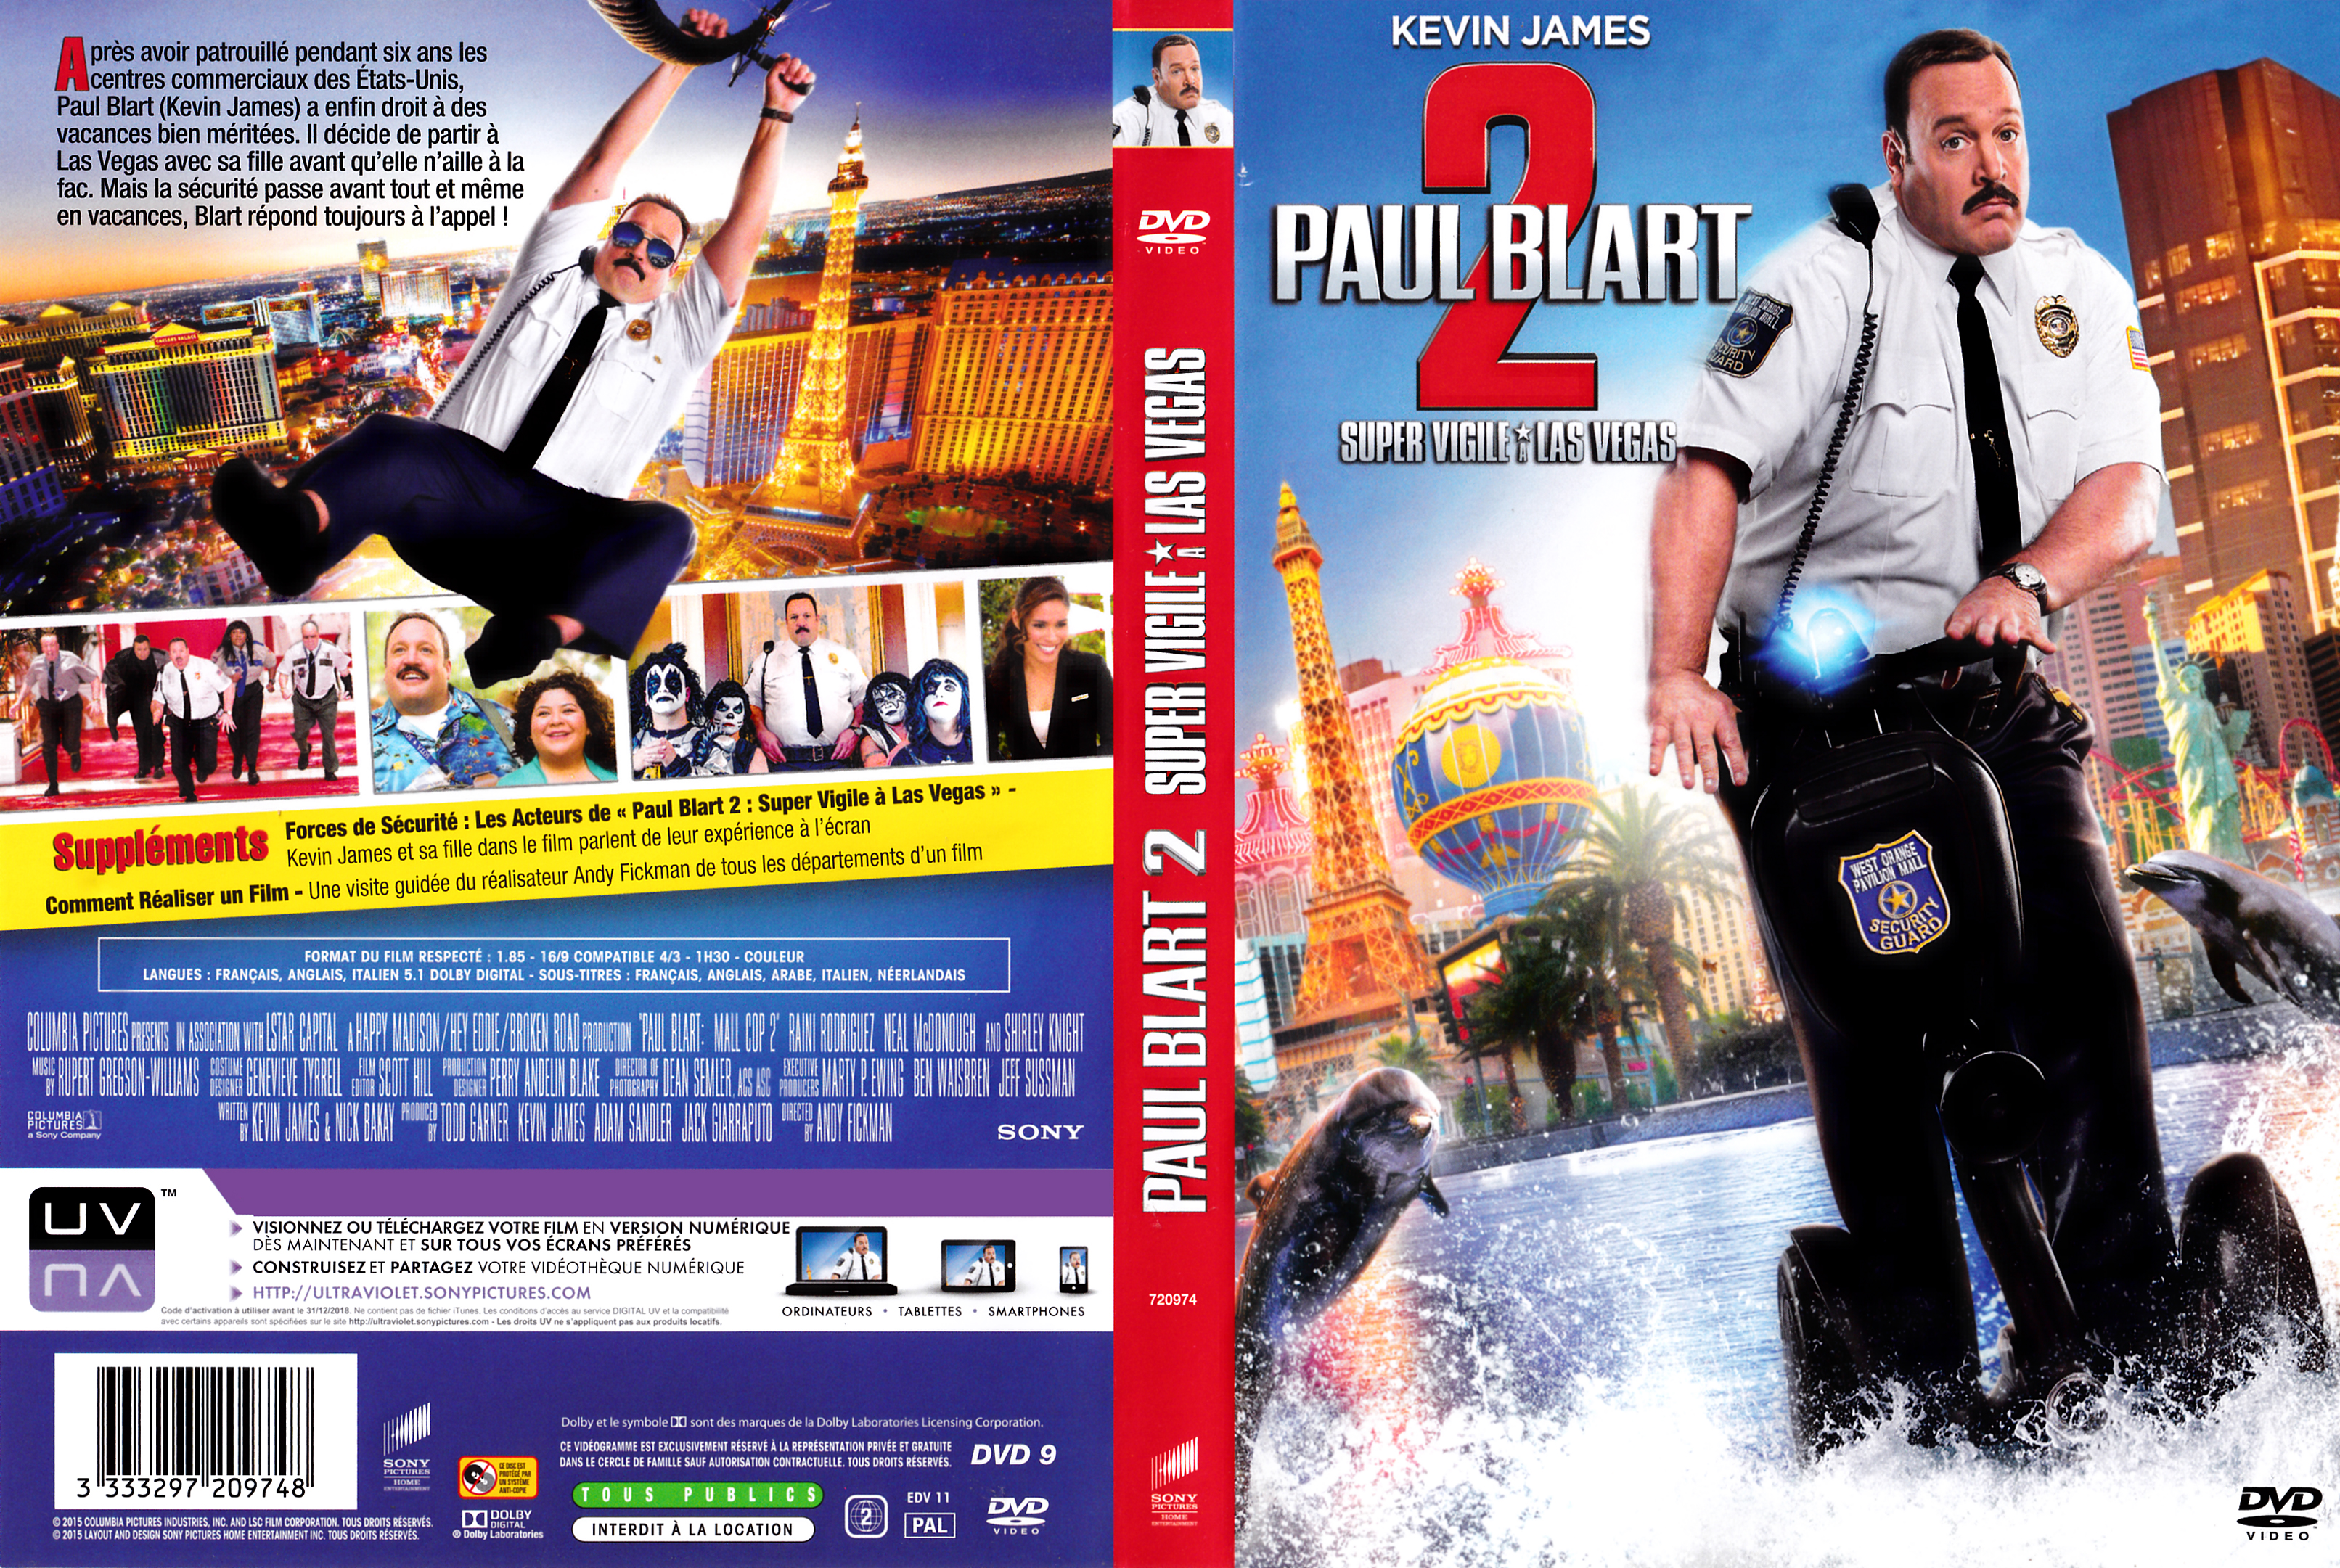 Jaquette DVD Paul blart 2 super vigile a las vegas custom